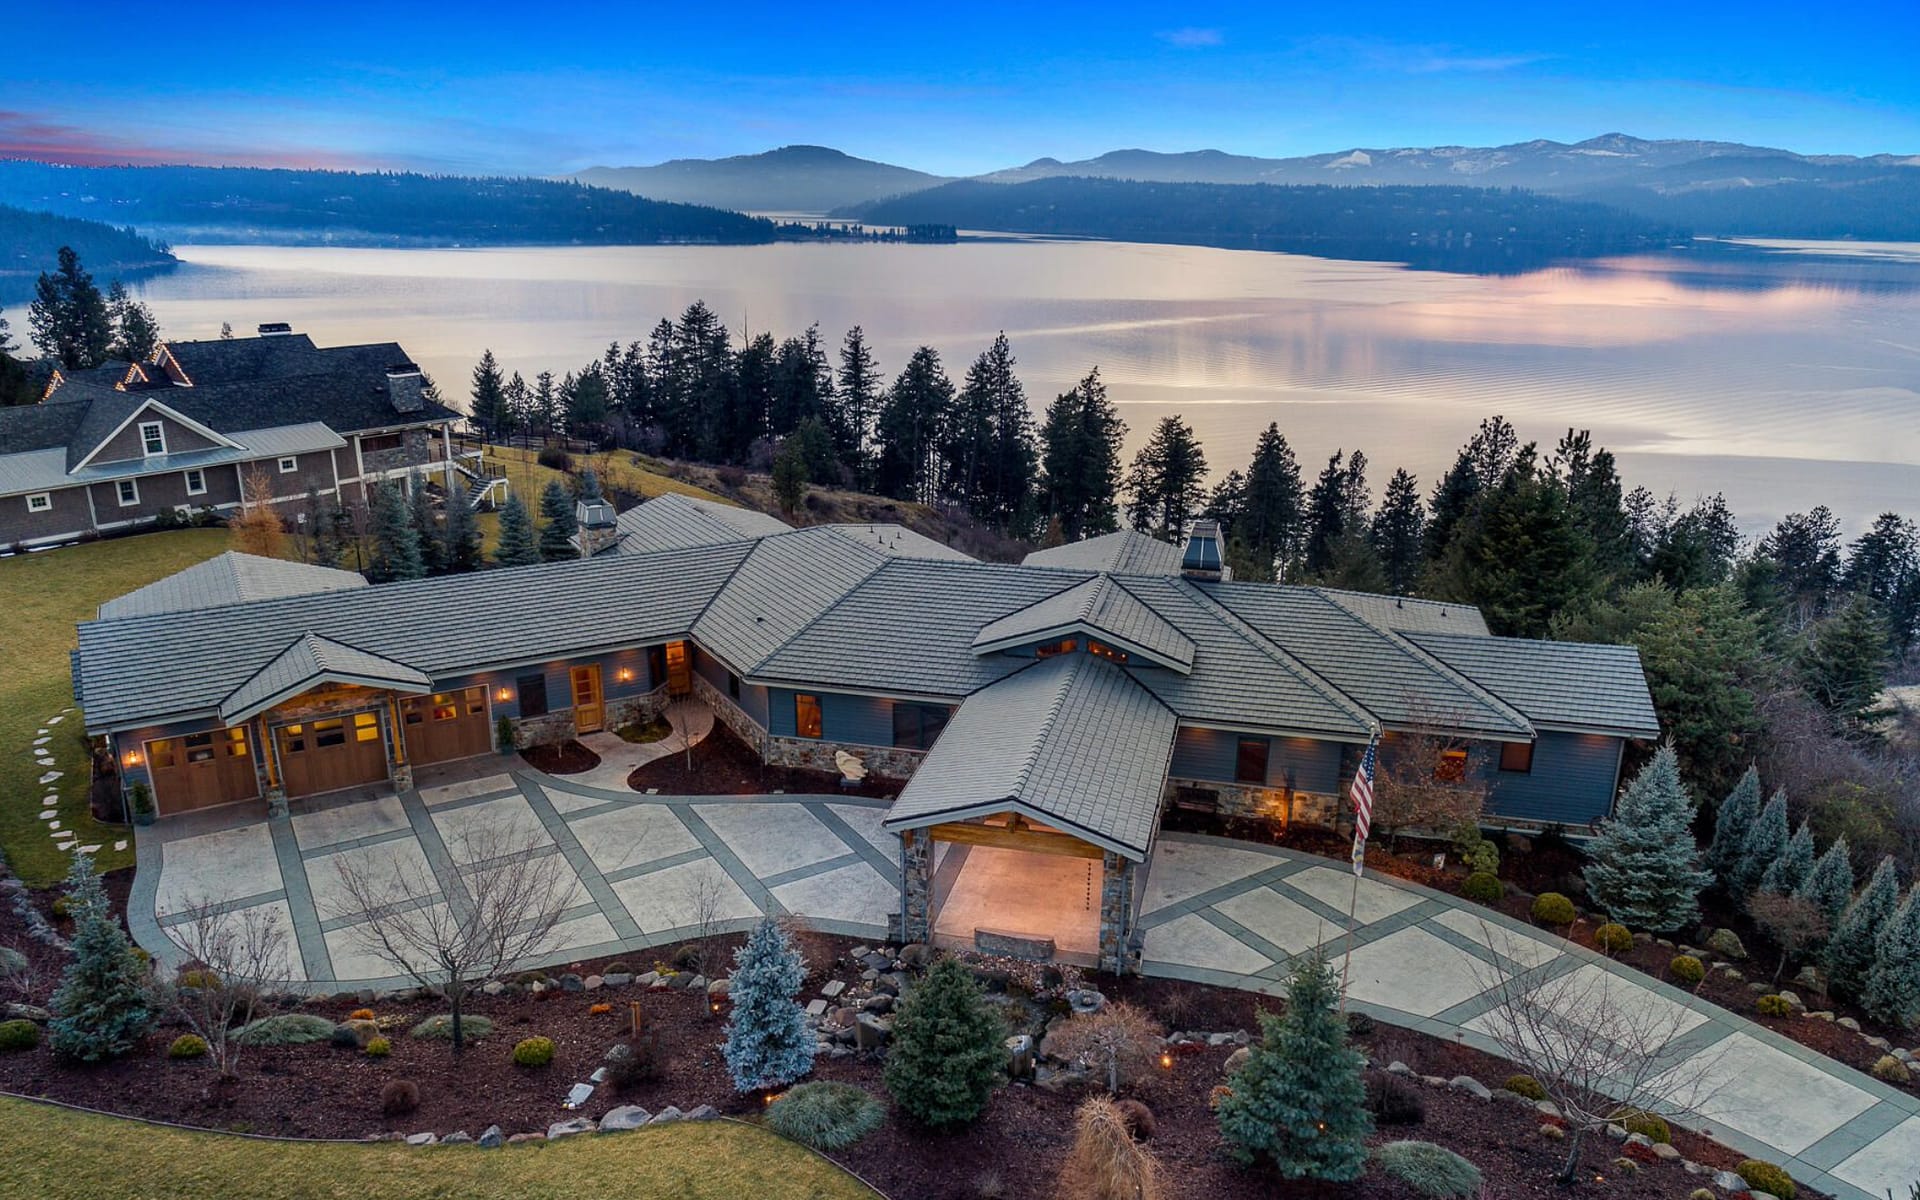 $6 Million Idaho Home With Lake Views (PHOTOS)